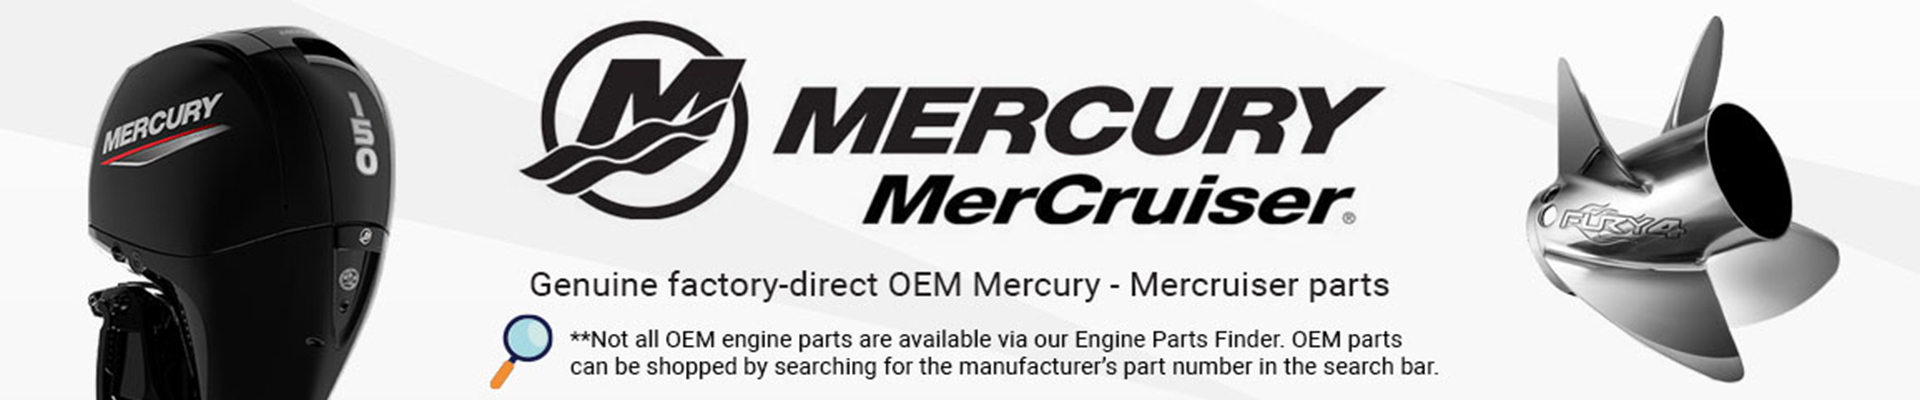 mercury-mercruiser-brand-page-banner.jpg